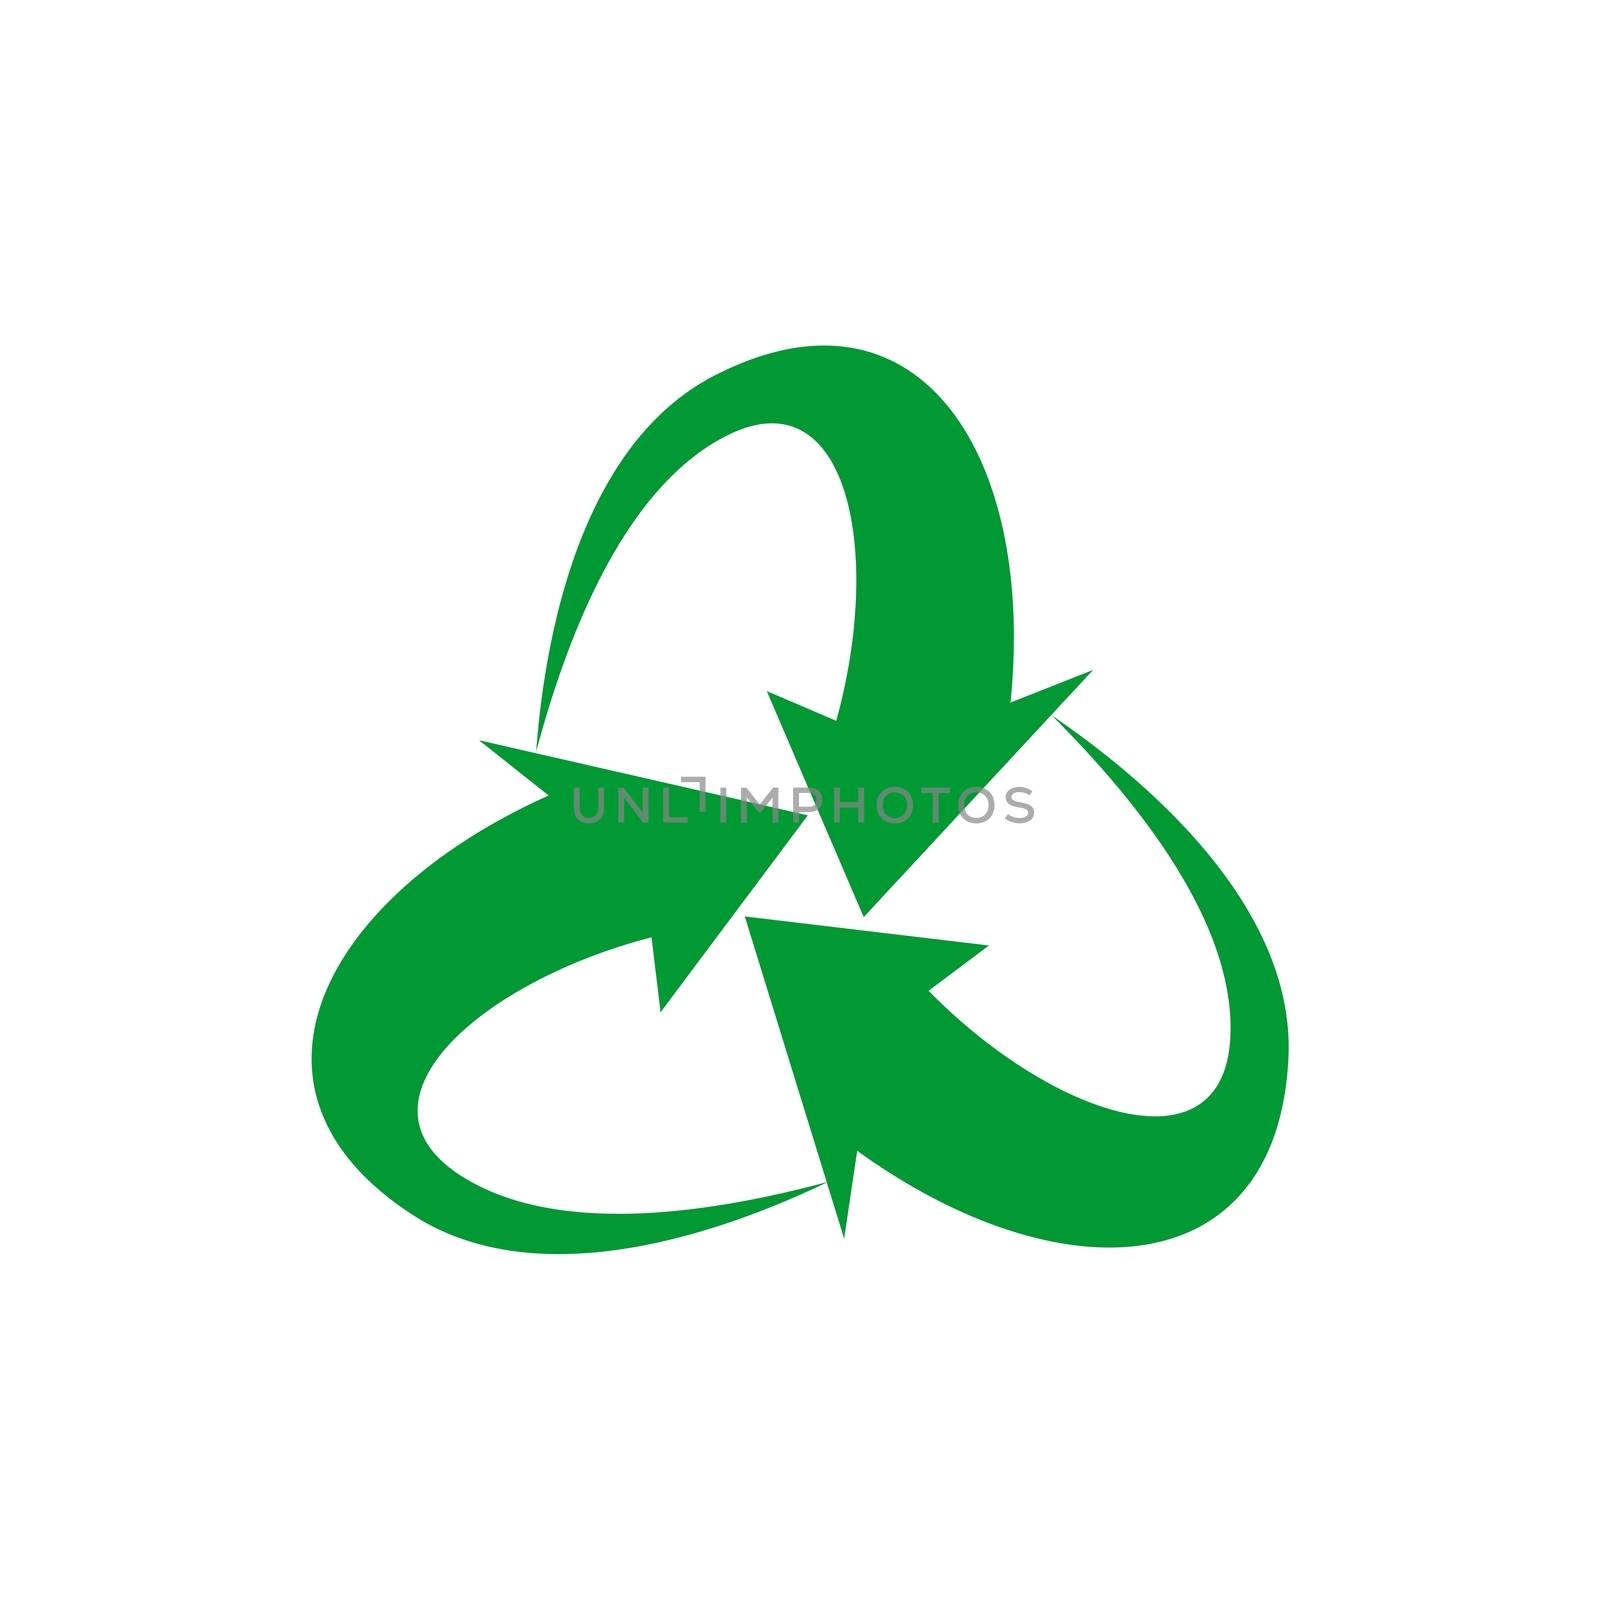 Green Recycle Arrow Logo Template Illustration Design. Vector EPS 10. by soponyono1